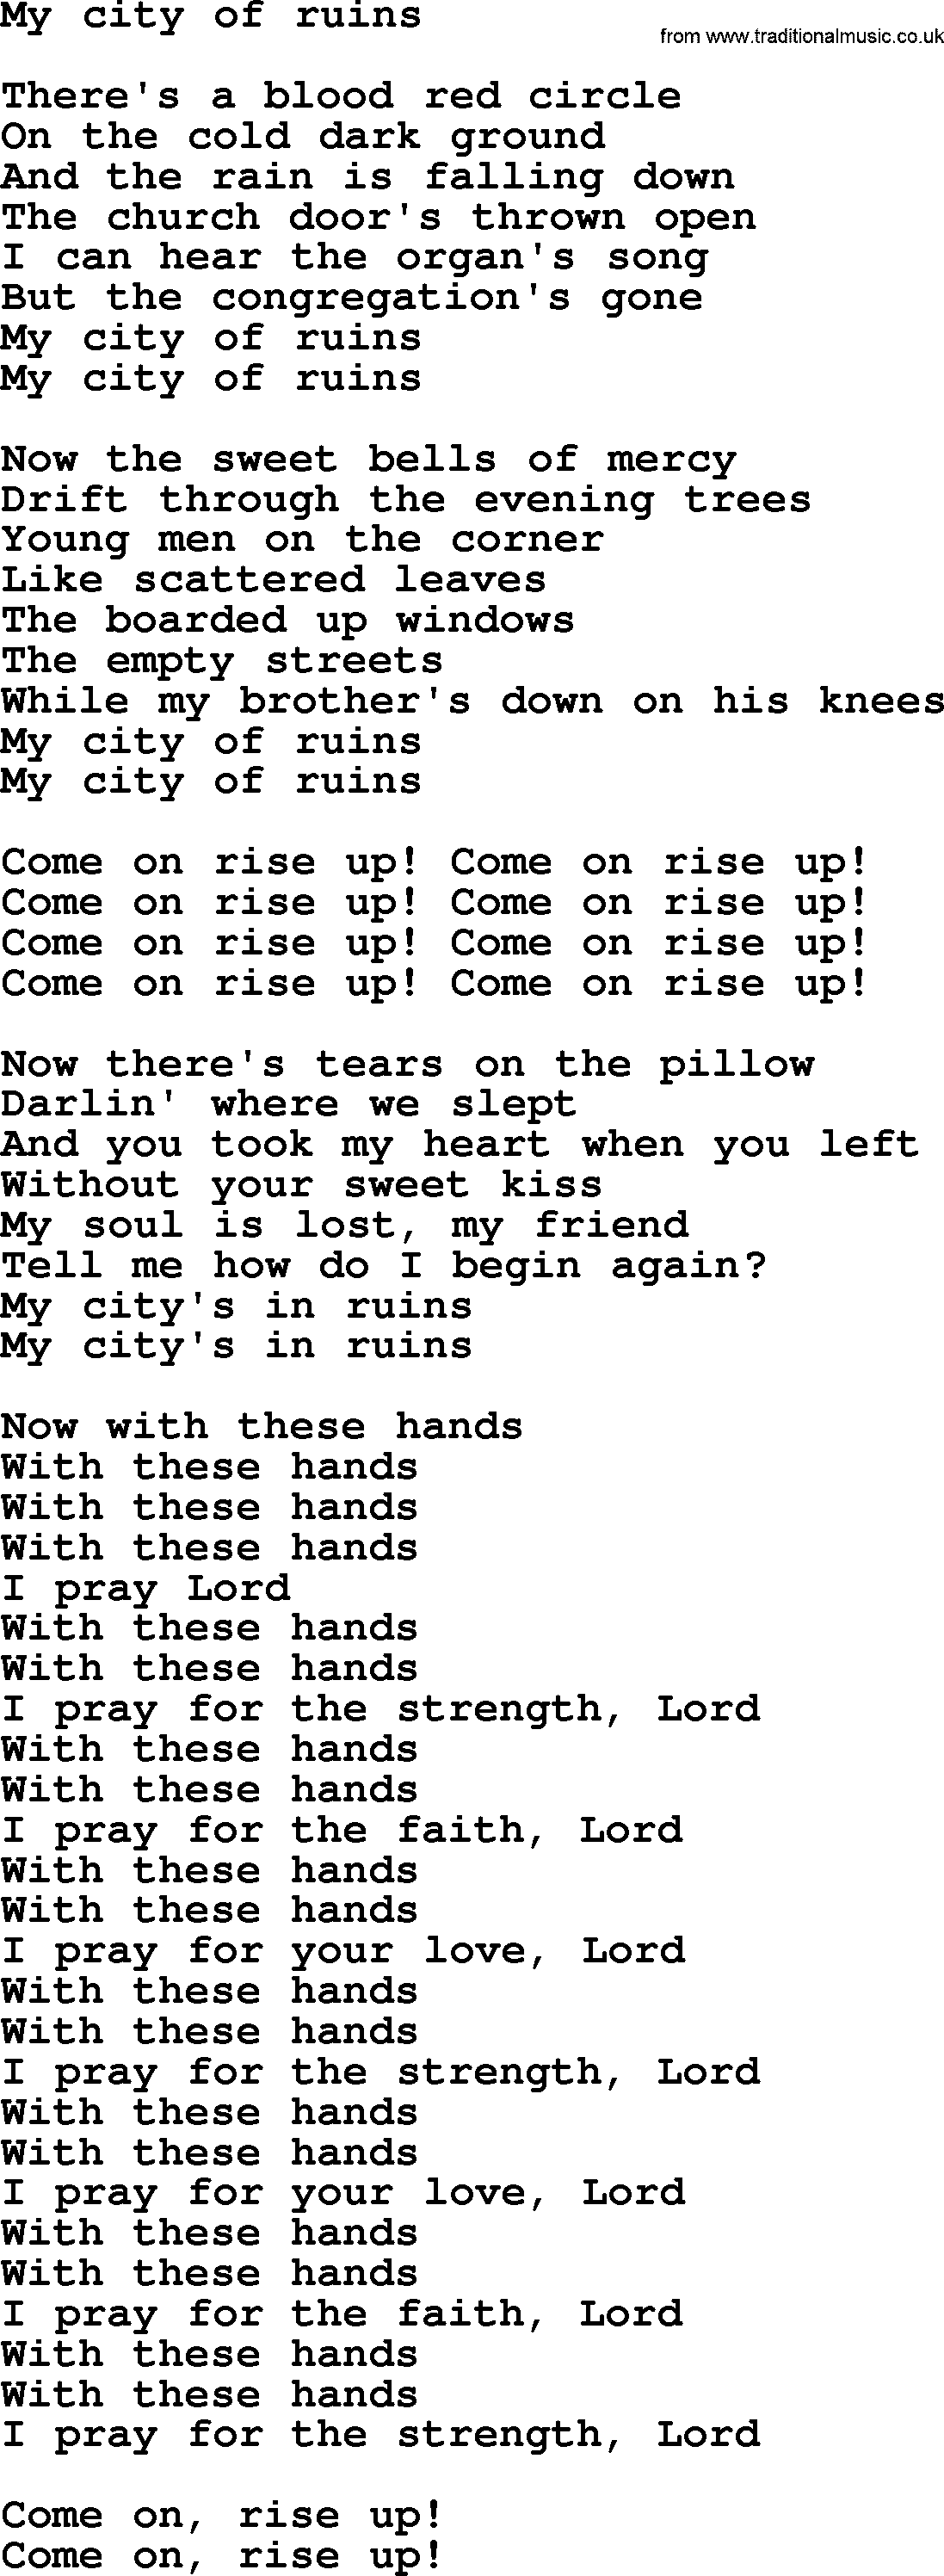 Bruce Springsteen song: My City Of Ruins lyrics